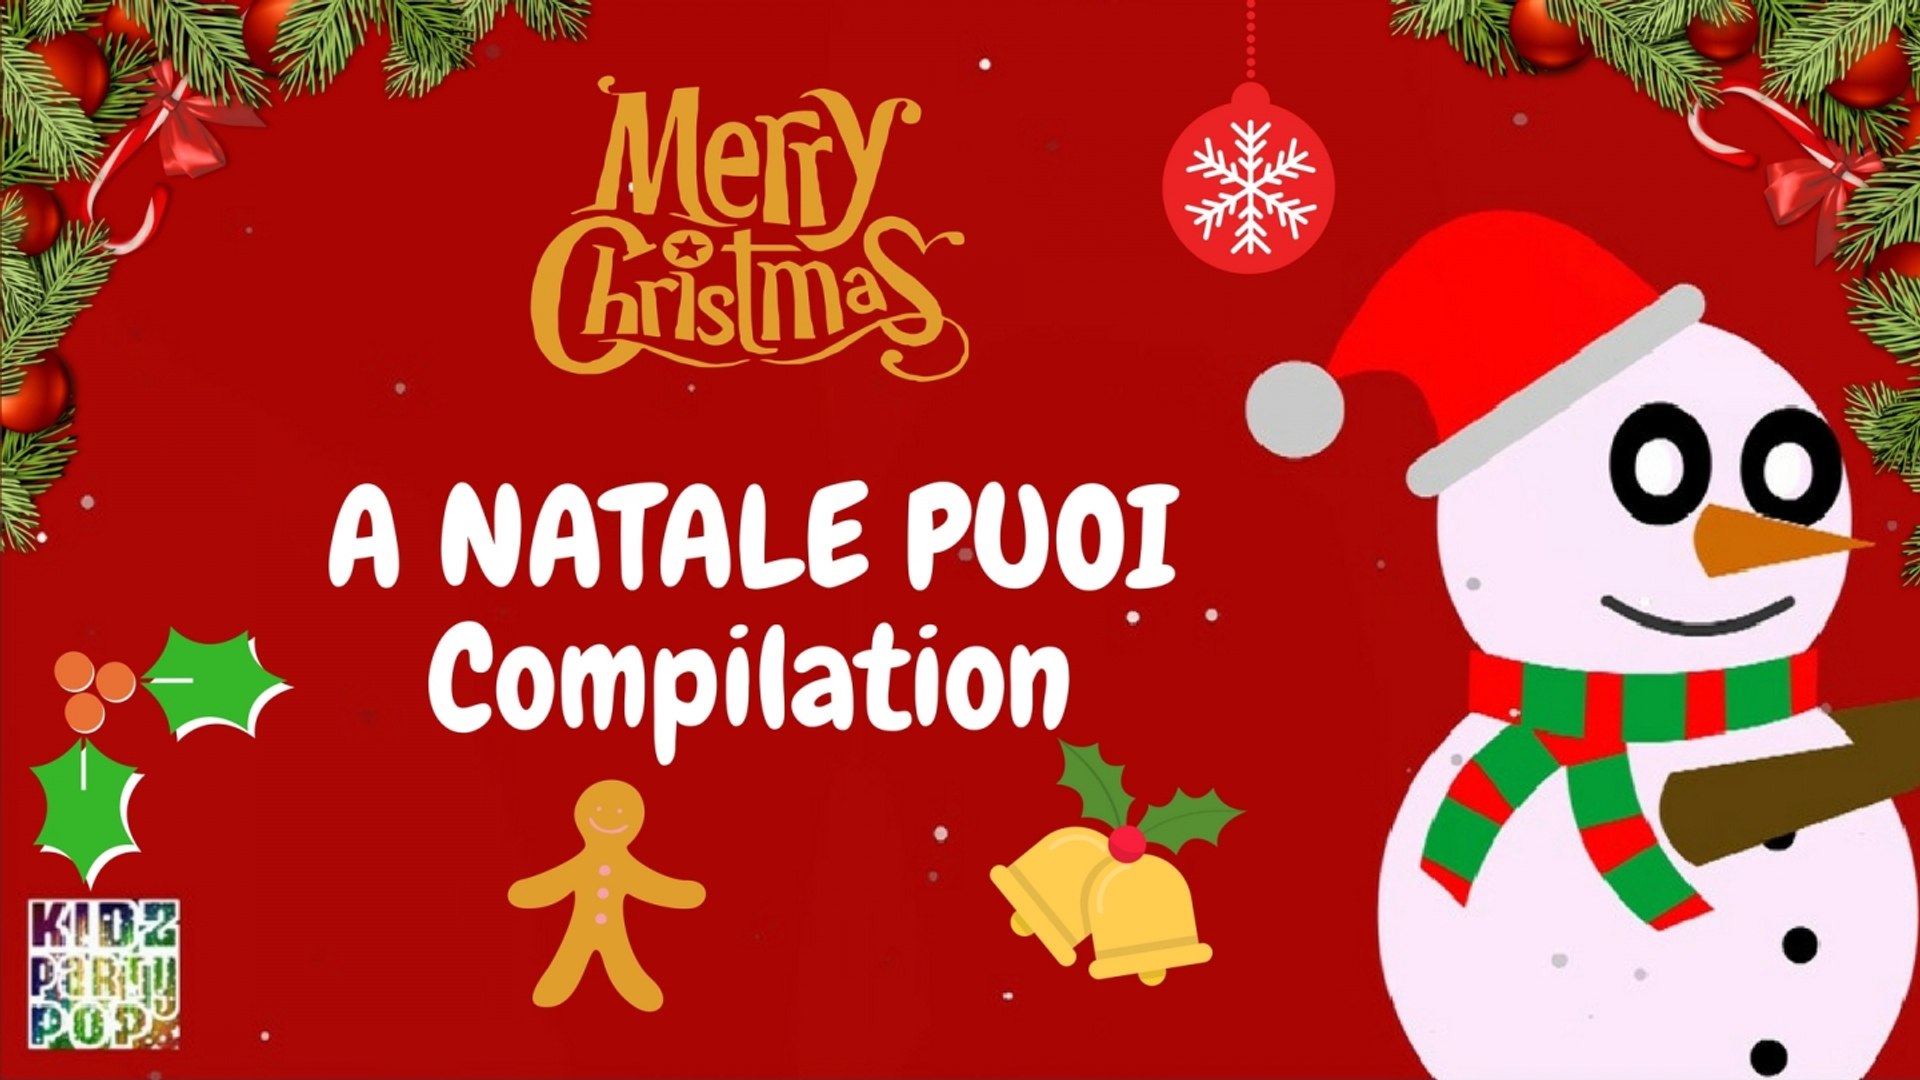 Canzone Di Natale A Natale Puoi.Le Piu Belle Canzoni Di Natale A Natale Puoi Compilation Video Dailymotion